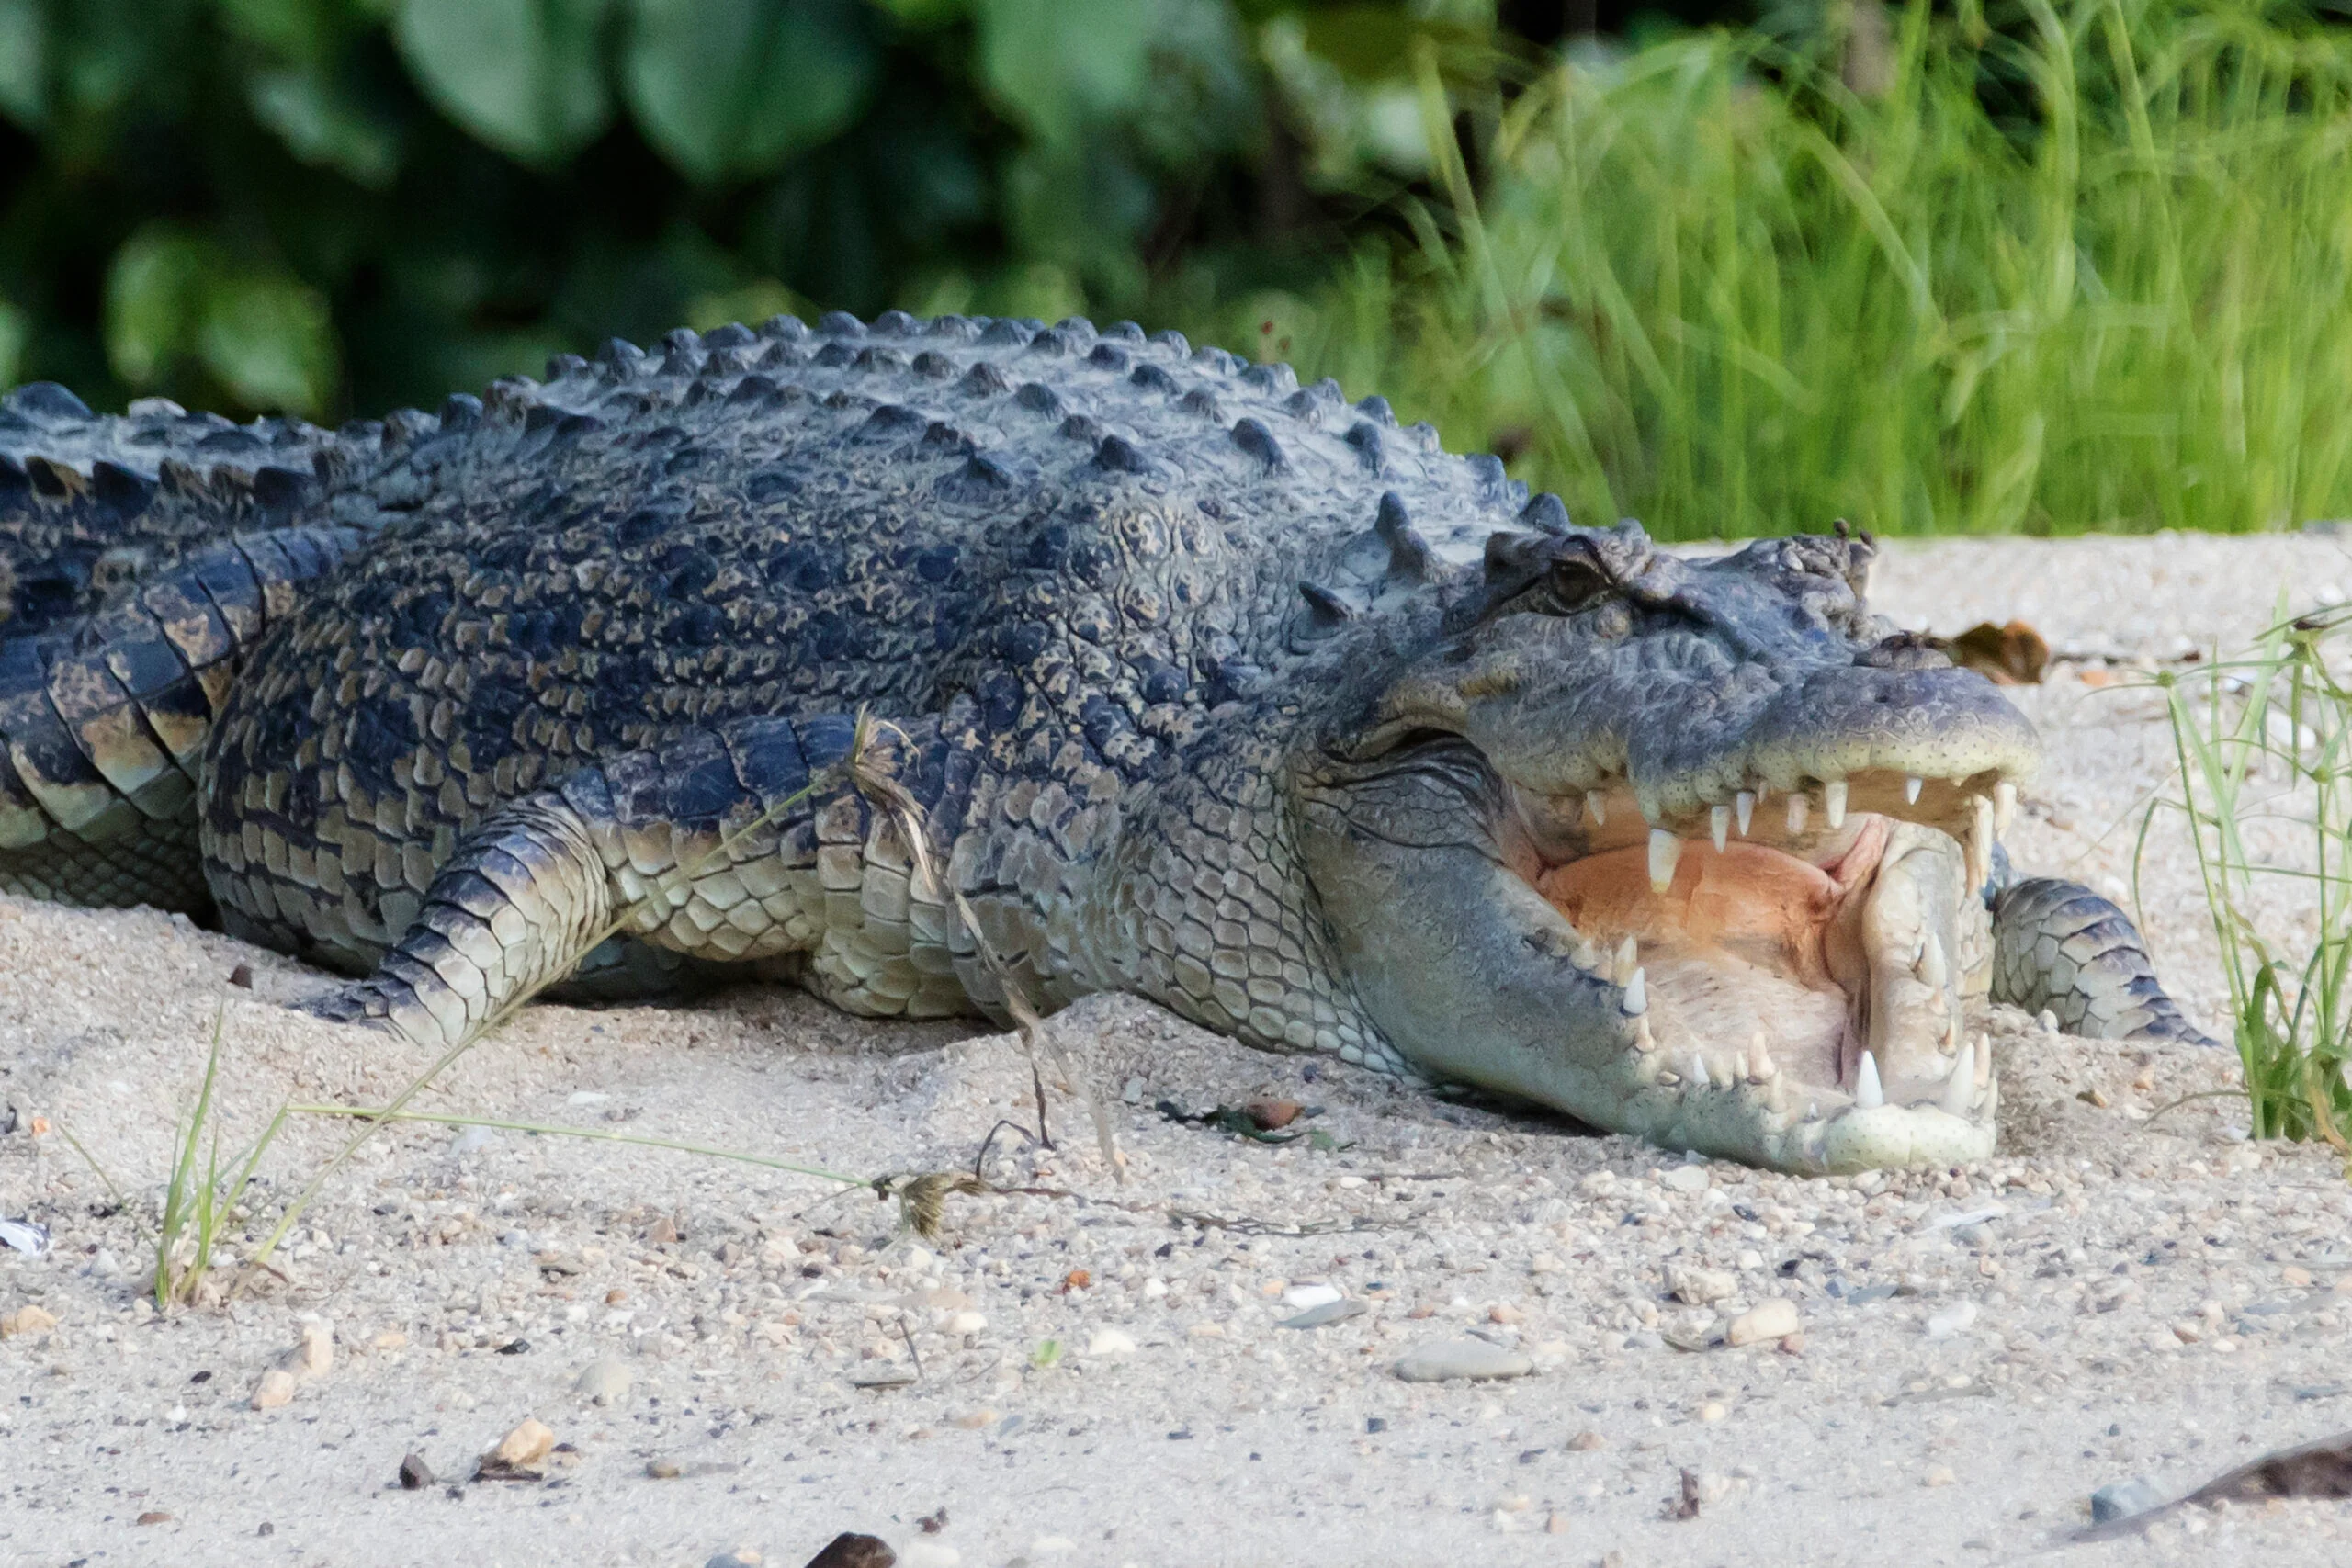 Saltwater crocodiles